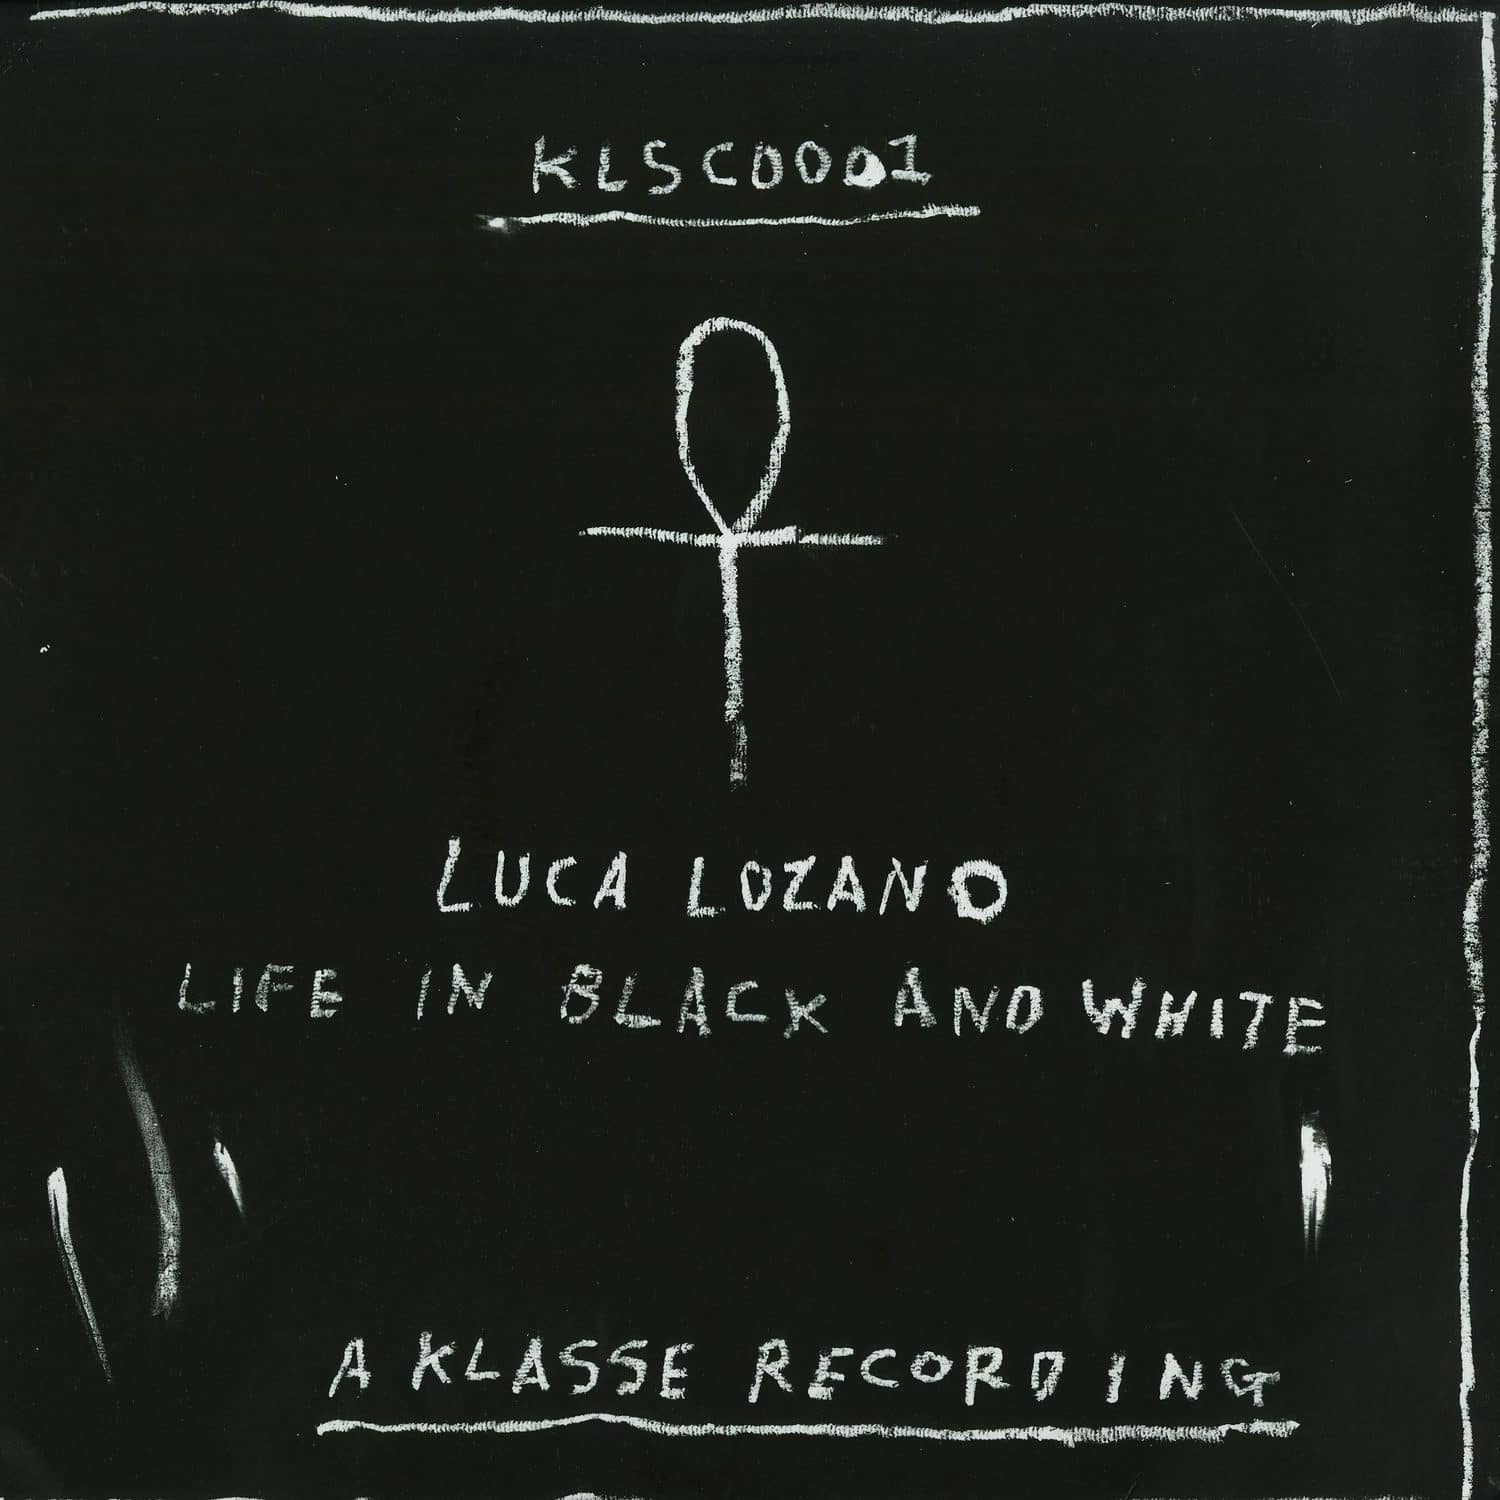 Luca Lozano - LIFE IN BLACK AND WHITE 